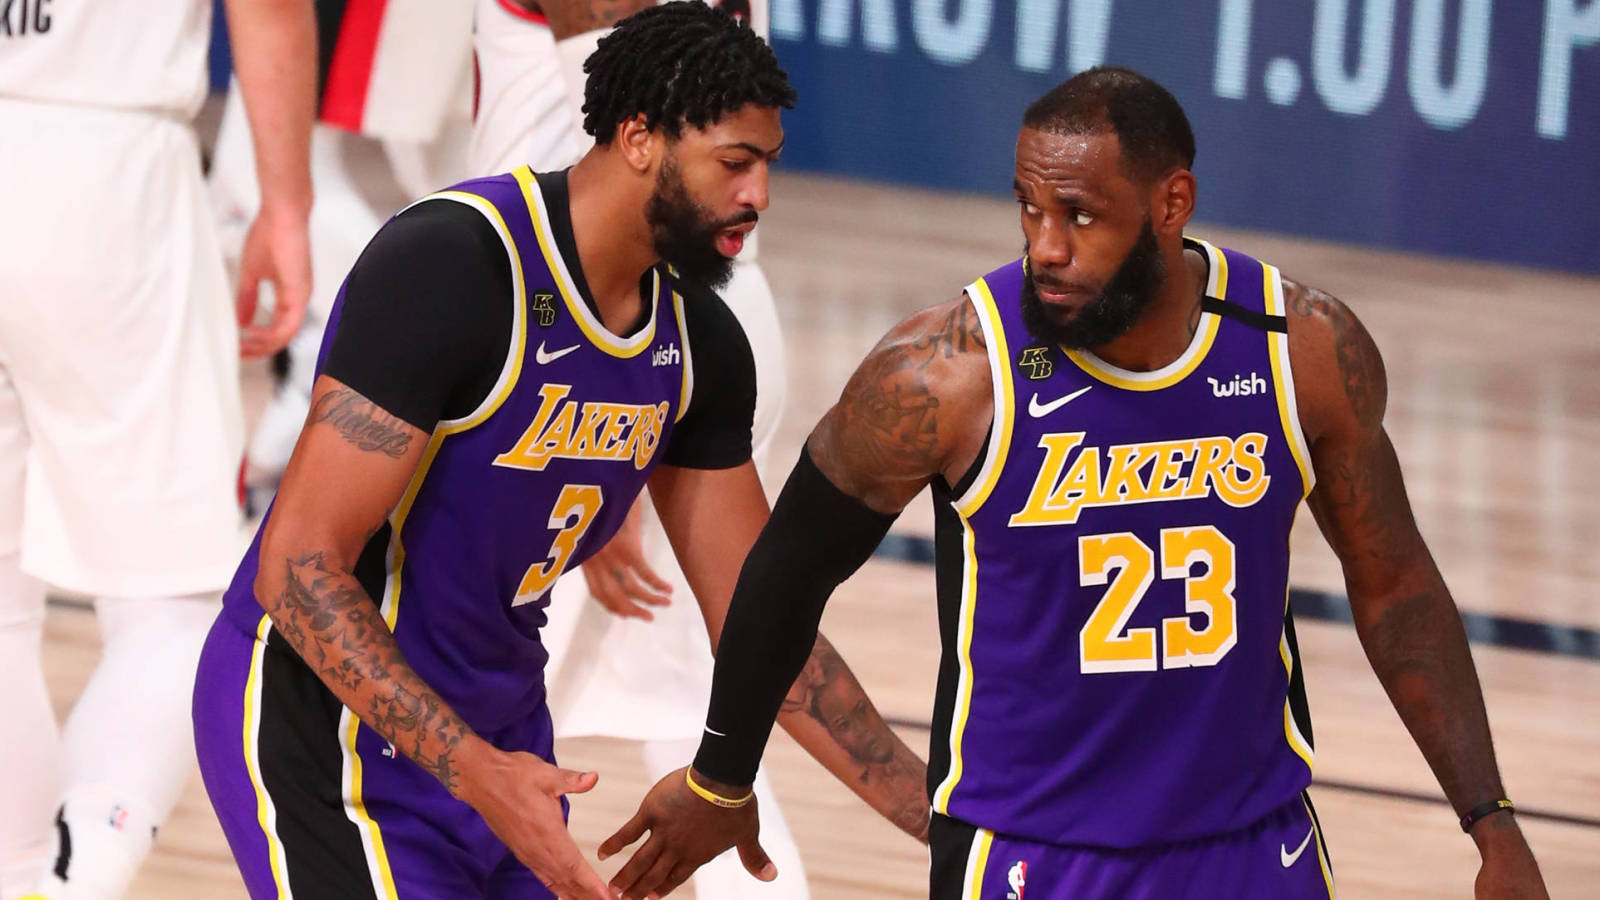 Lakers feel like the Black Mamba jerseys designed by Kobe are